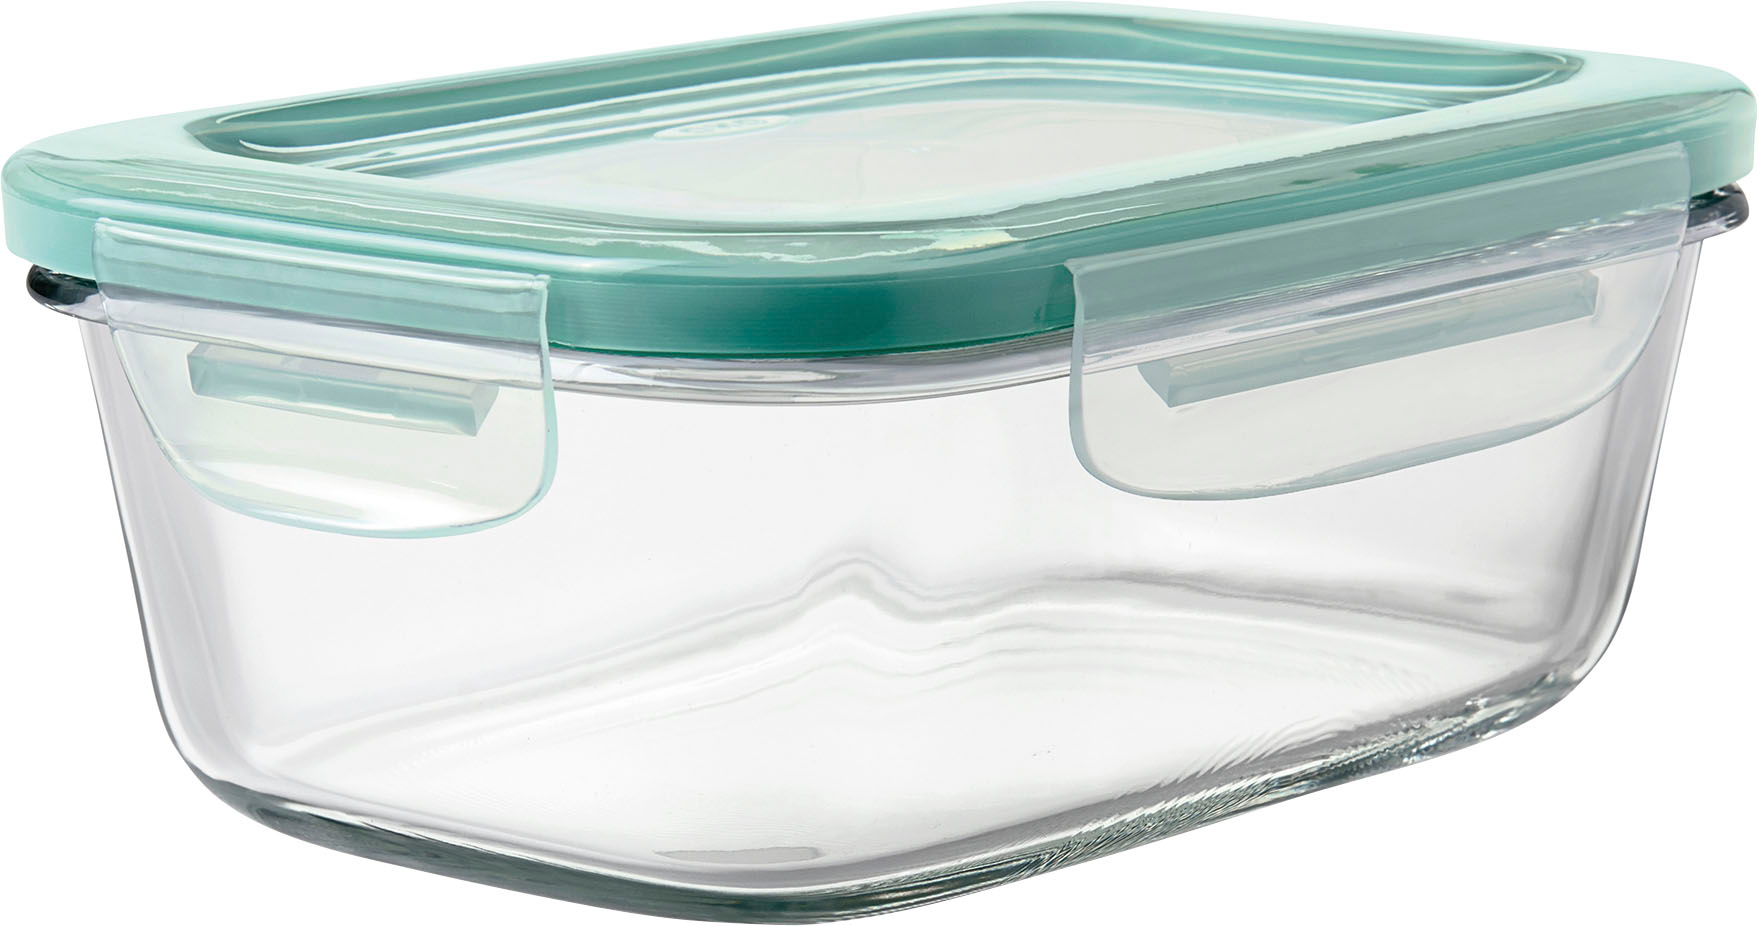 OXO Good Grips 2.8 Qt. Clear Square SAN Plastic Food Storage